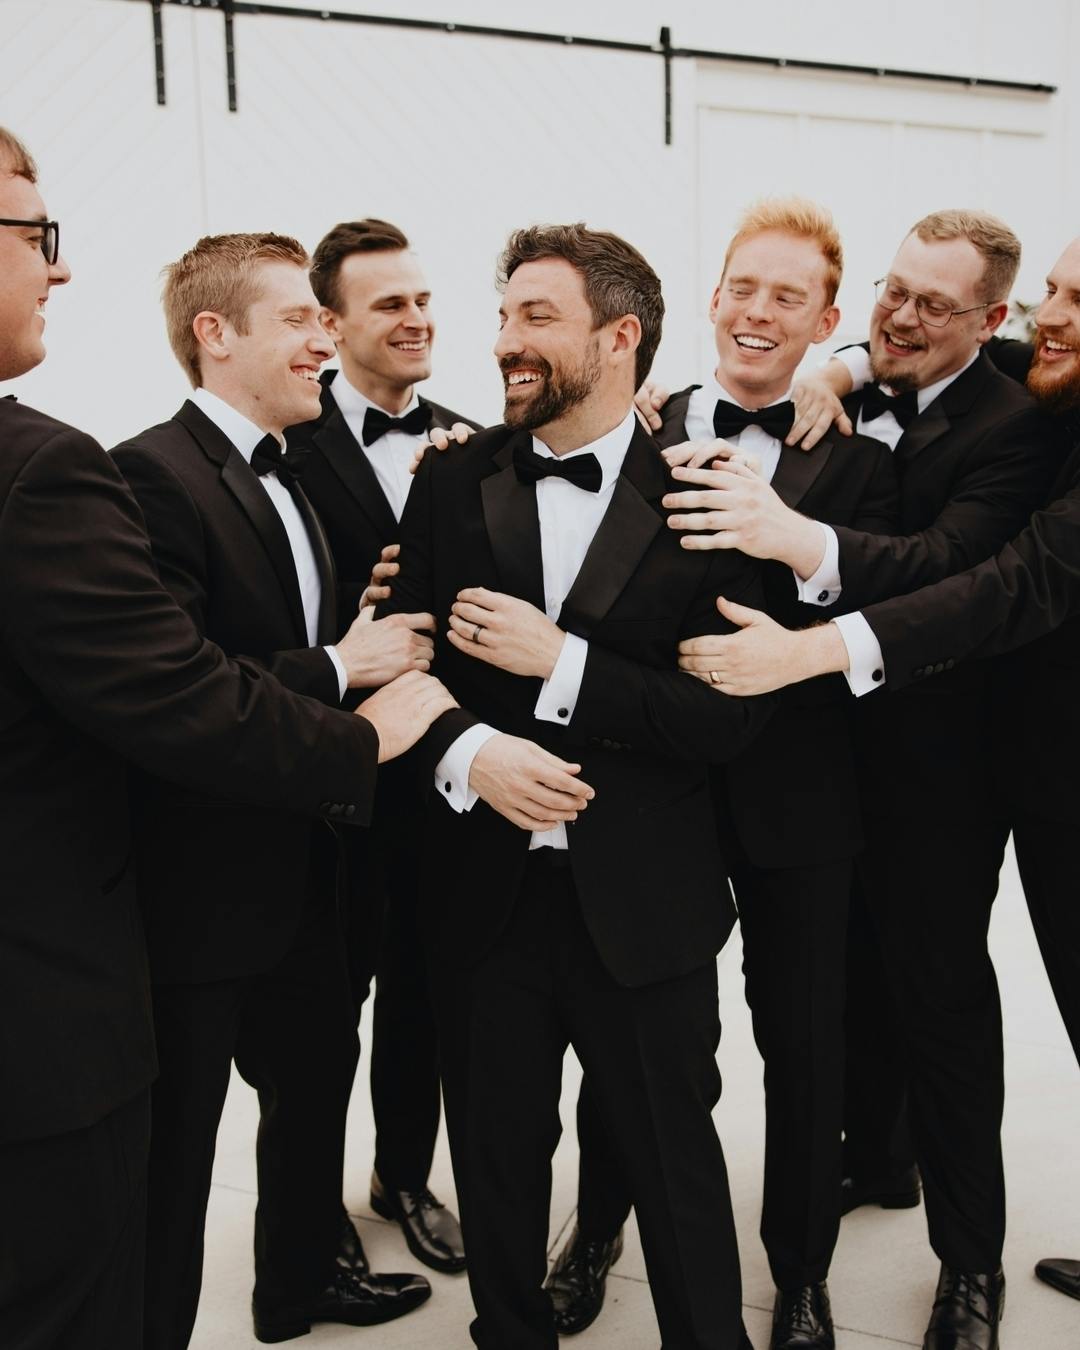 Black tie wedding attire for groomsmen wearing notch lapel black tuxedos for men